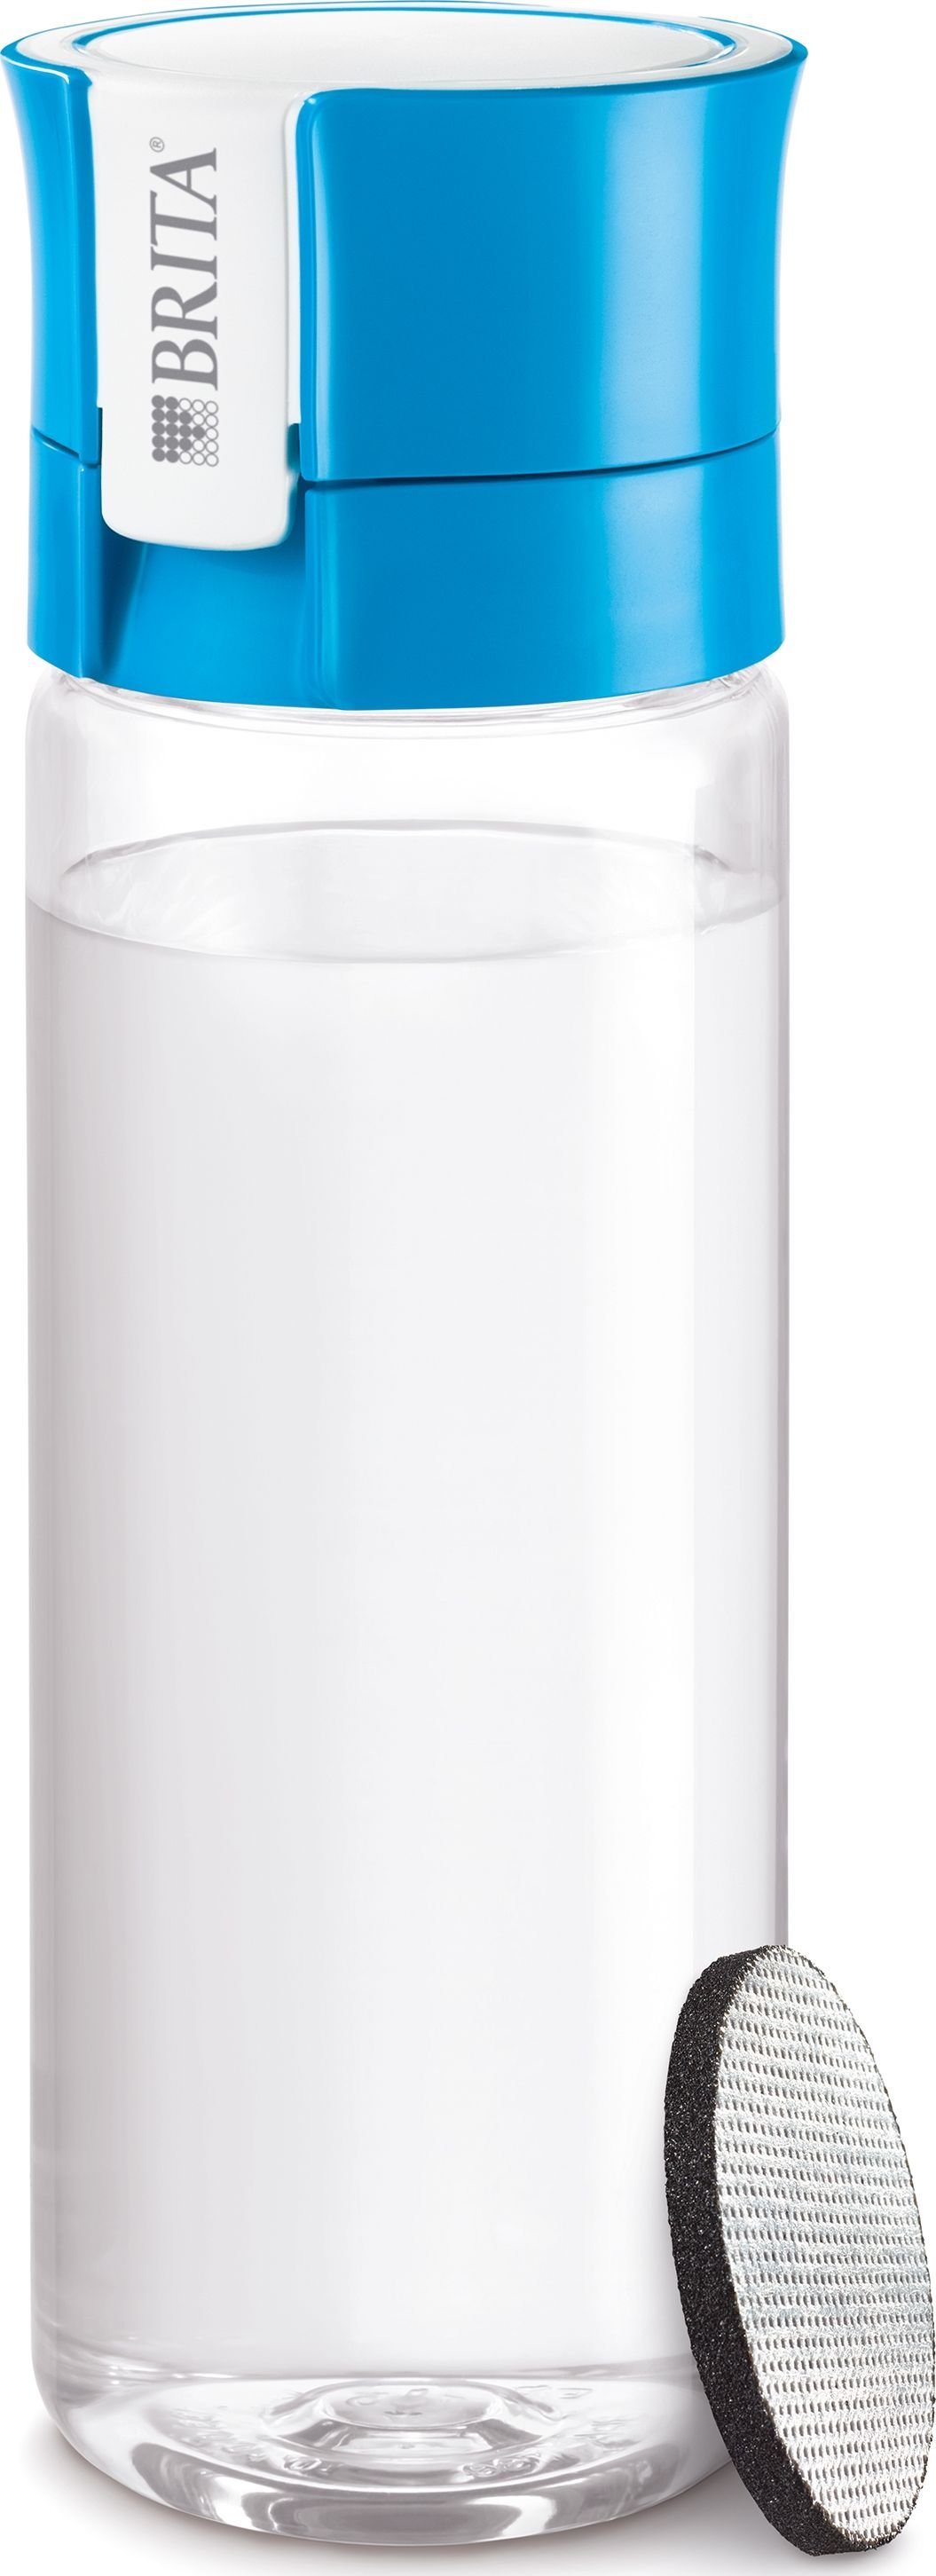 Sticla Brita pentru filtrarea apei , model Fill&Go Vital albastra, 600 ml